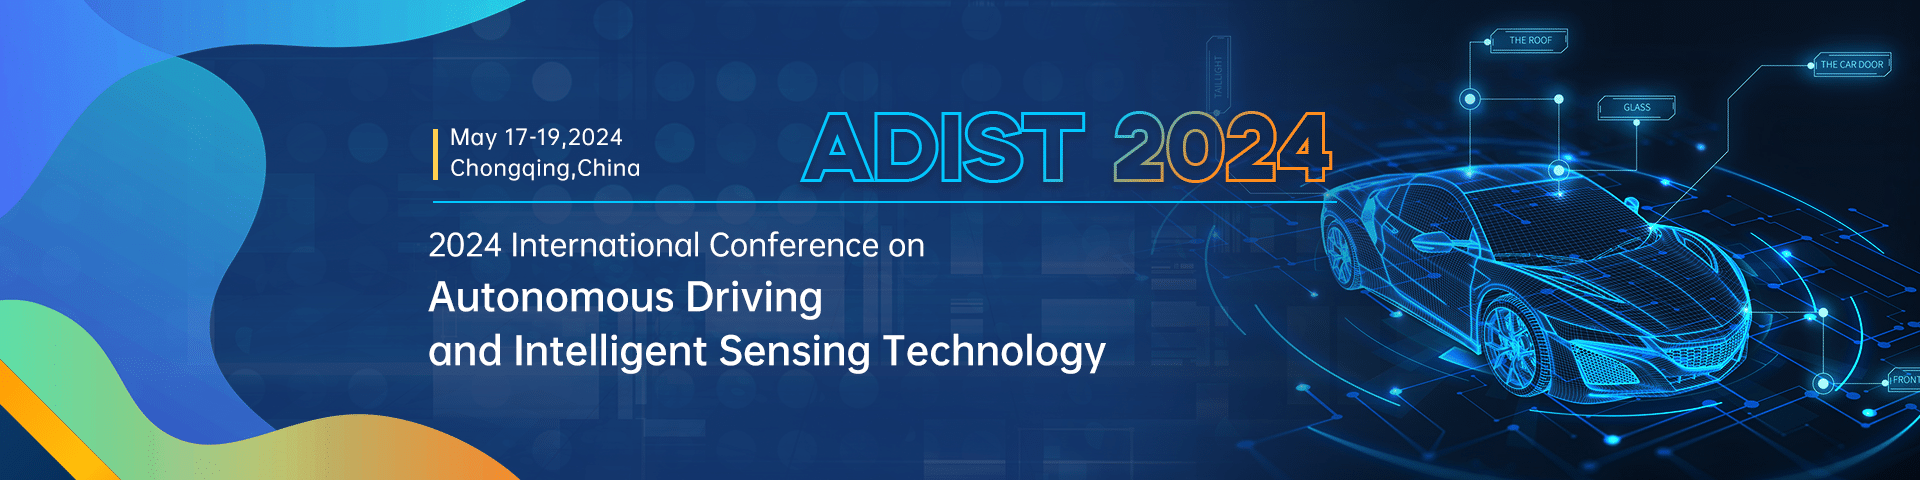 2024 International Conference on Autonomous Driving and Intelligent Sensing Technology (ADIST 2024)